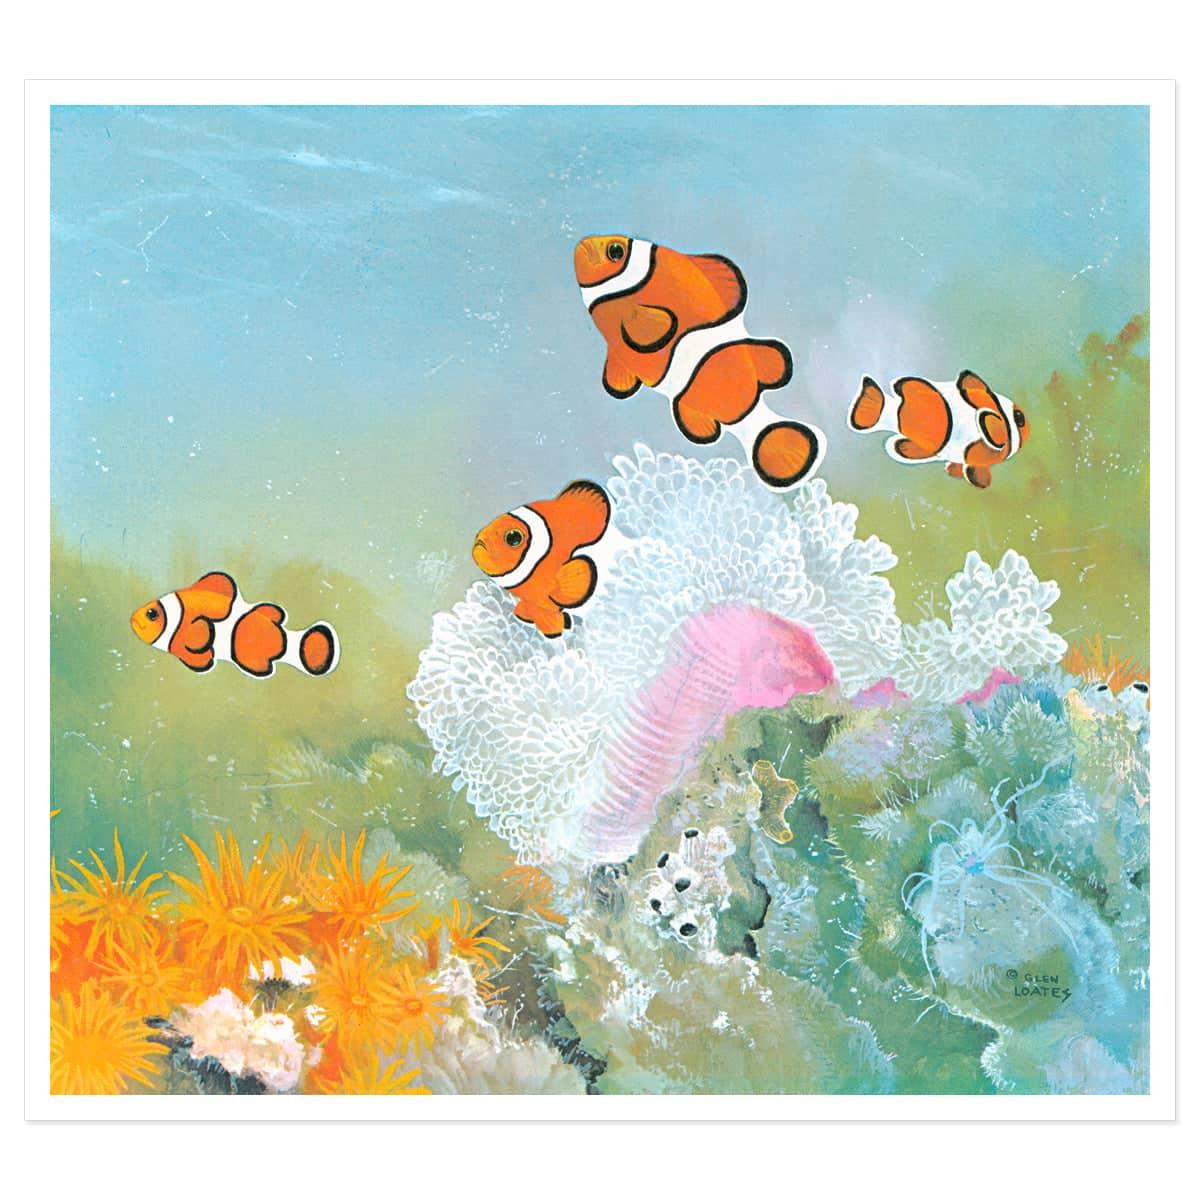 Clown Fish with Sea Anemones - Art Print | Artwork by Glen Loates